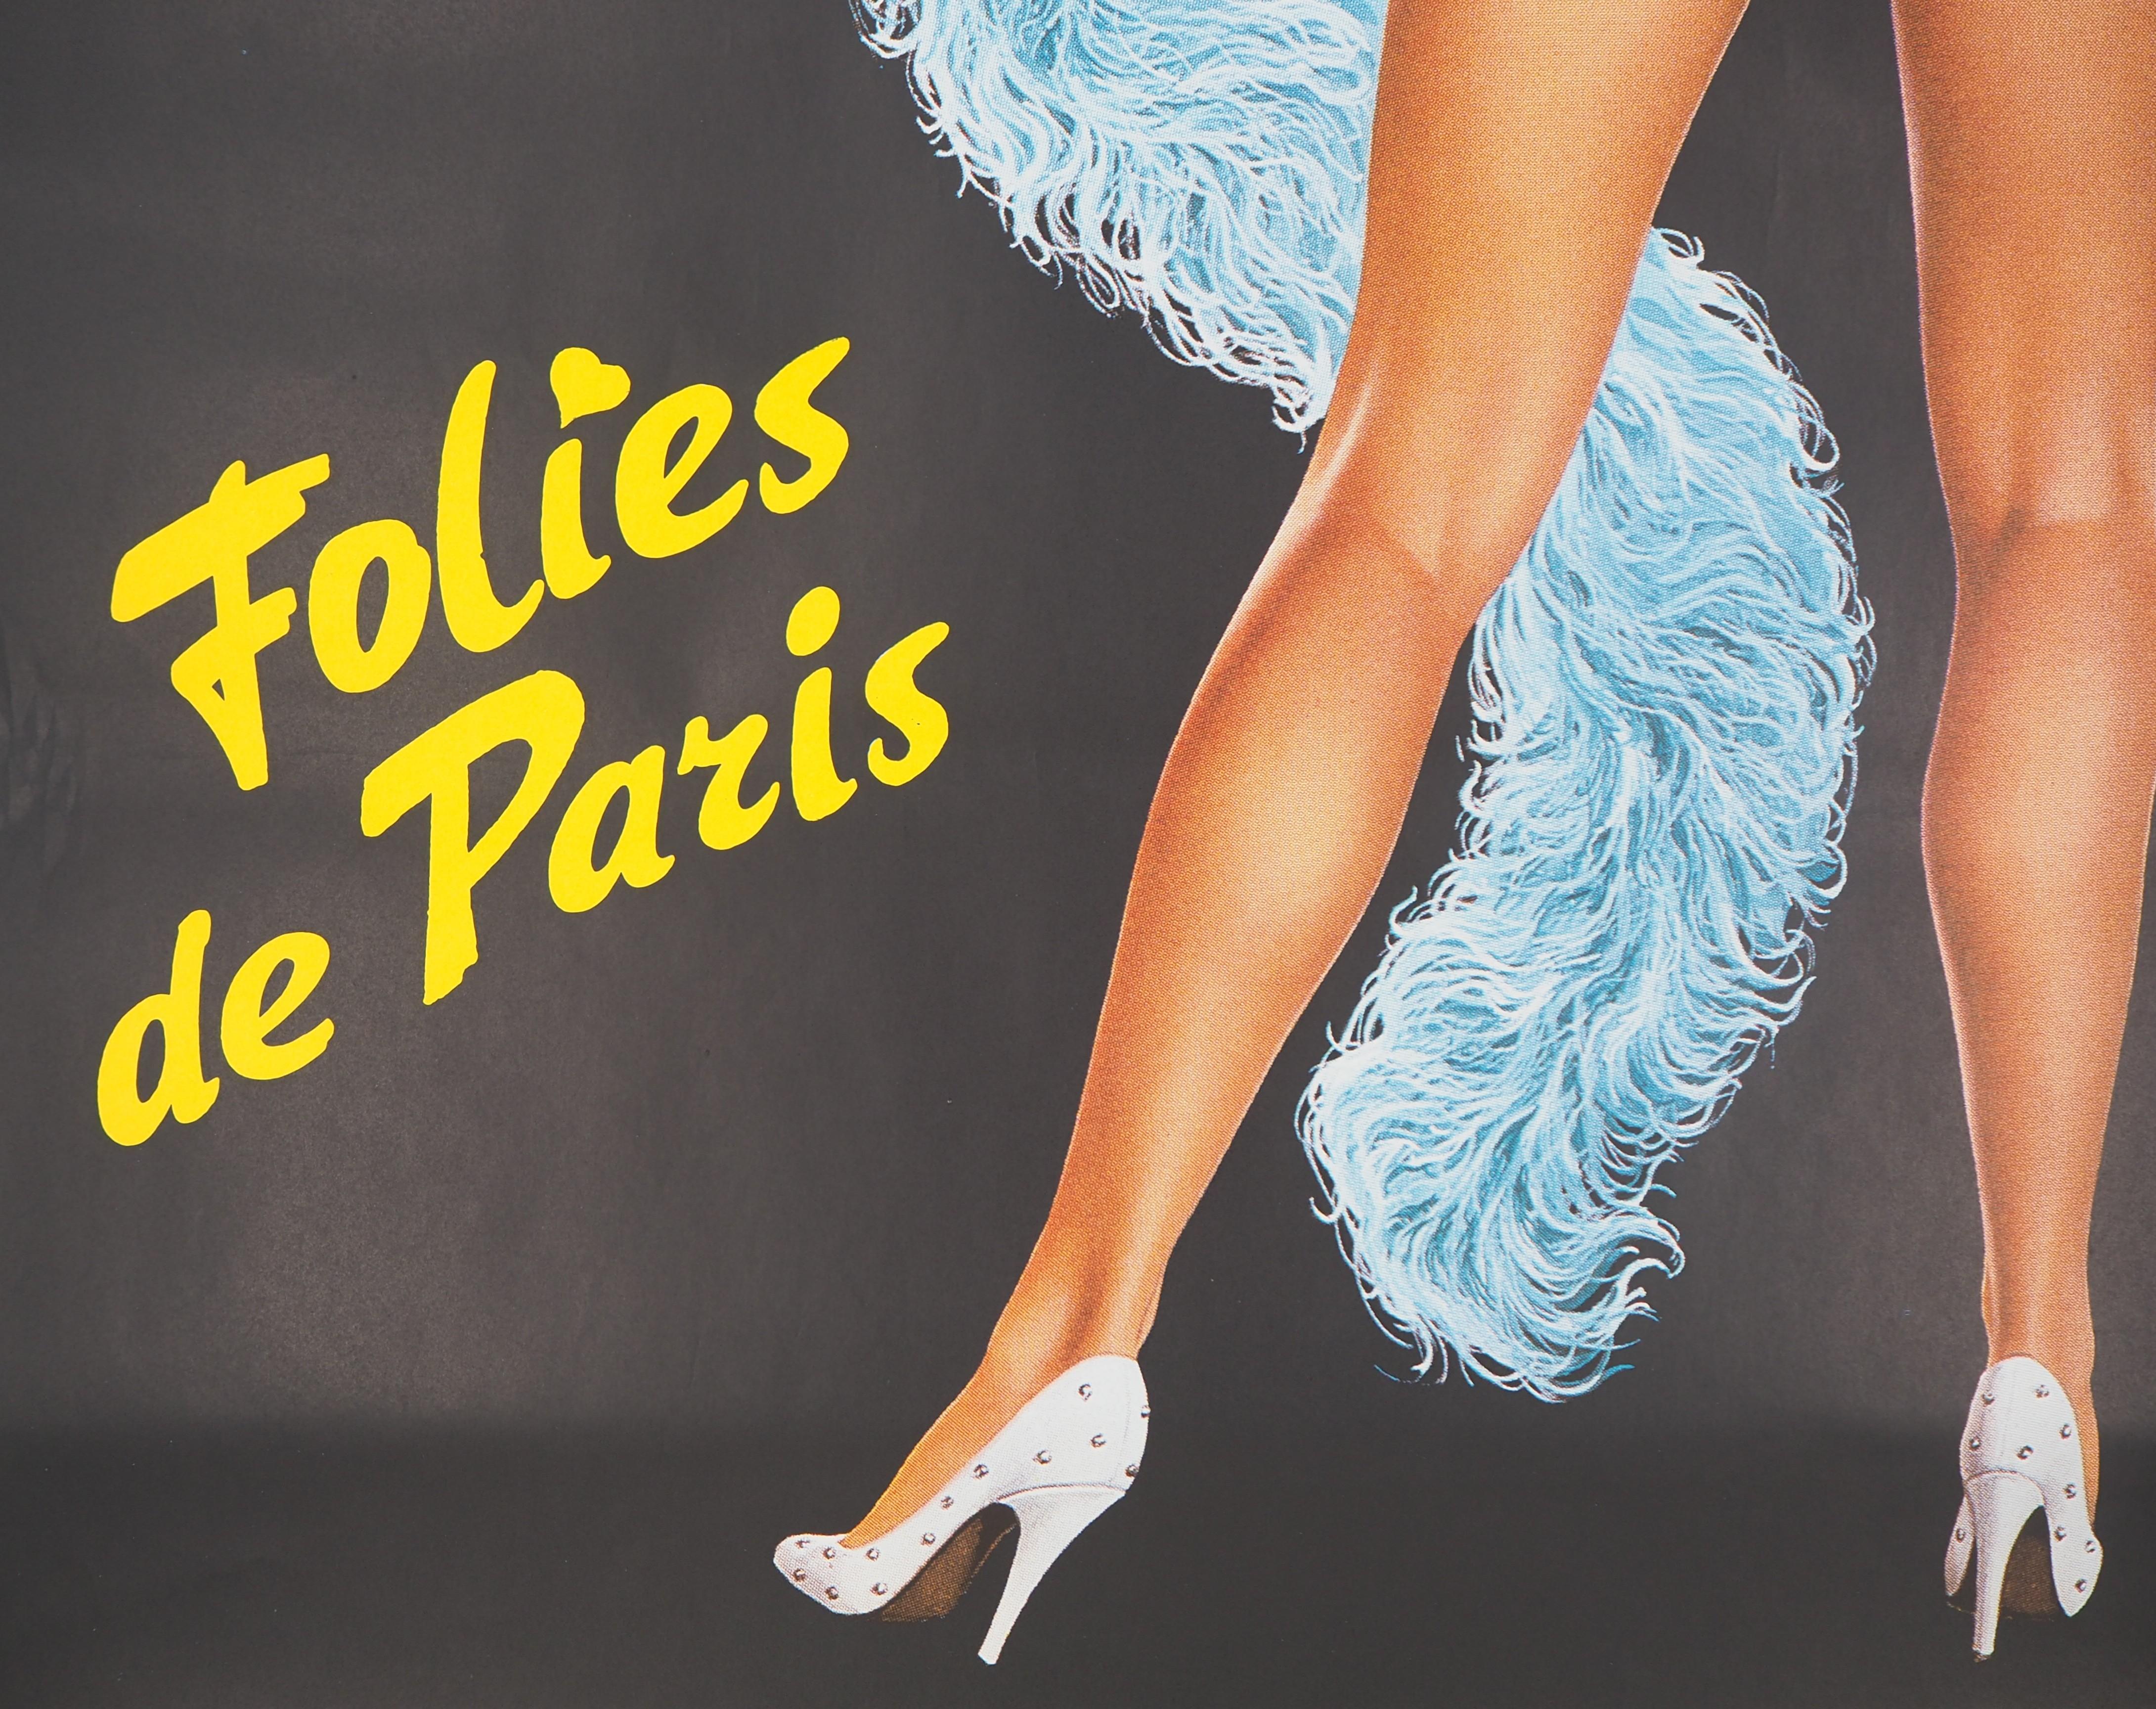 Folies Bergeres (Blue version) - Tall original vintage poster (Moulin Rouge) 2